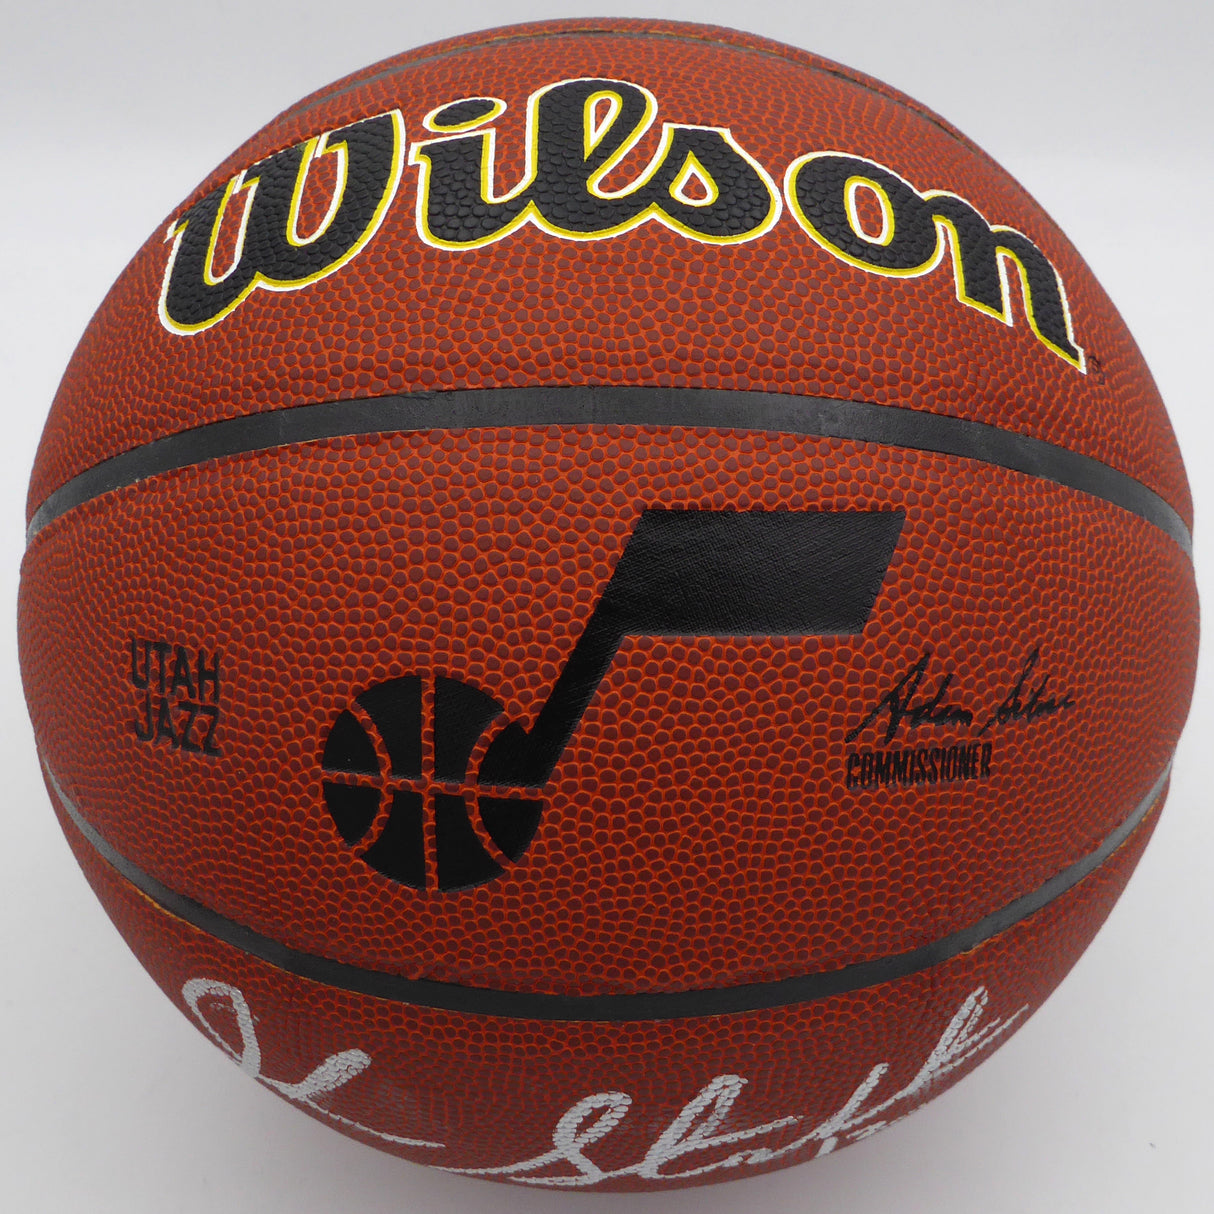 John Stockton Autographed Basketball Utah Jazz (Smudged) Beckett BAS QR #1W271720